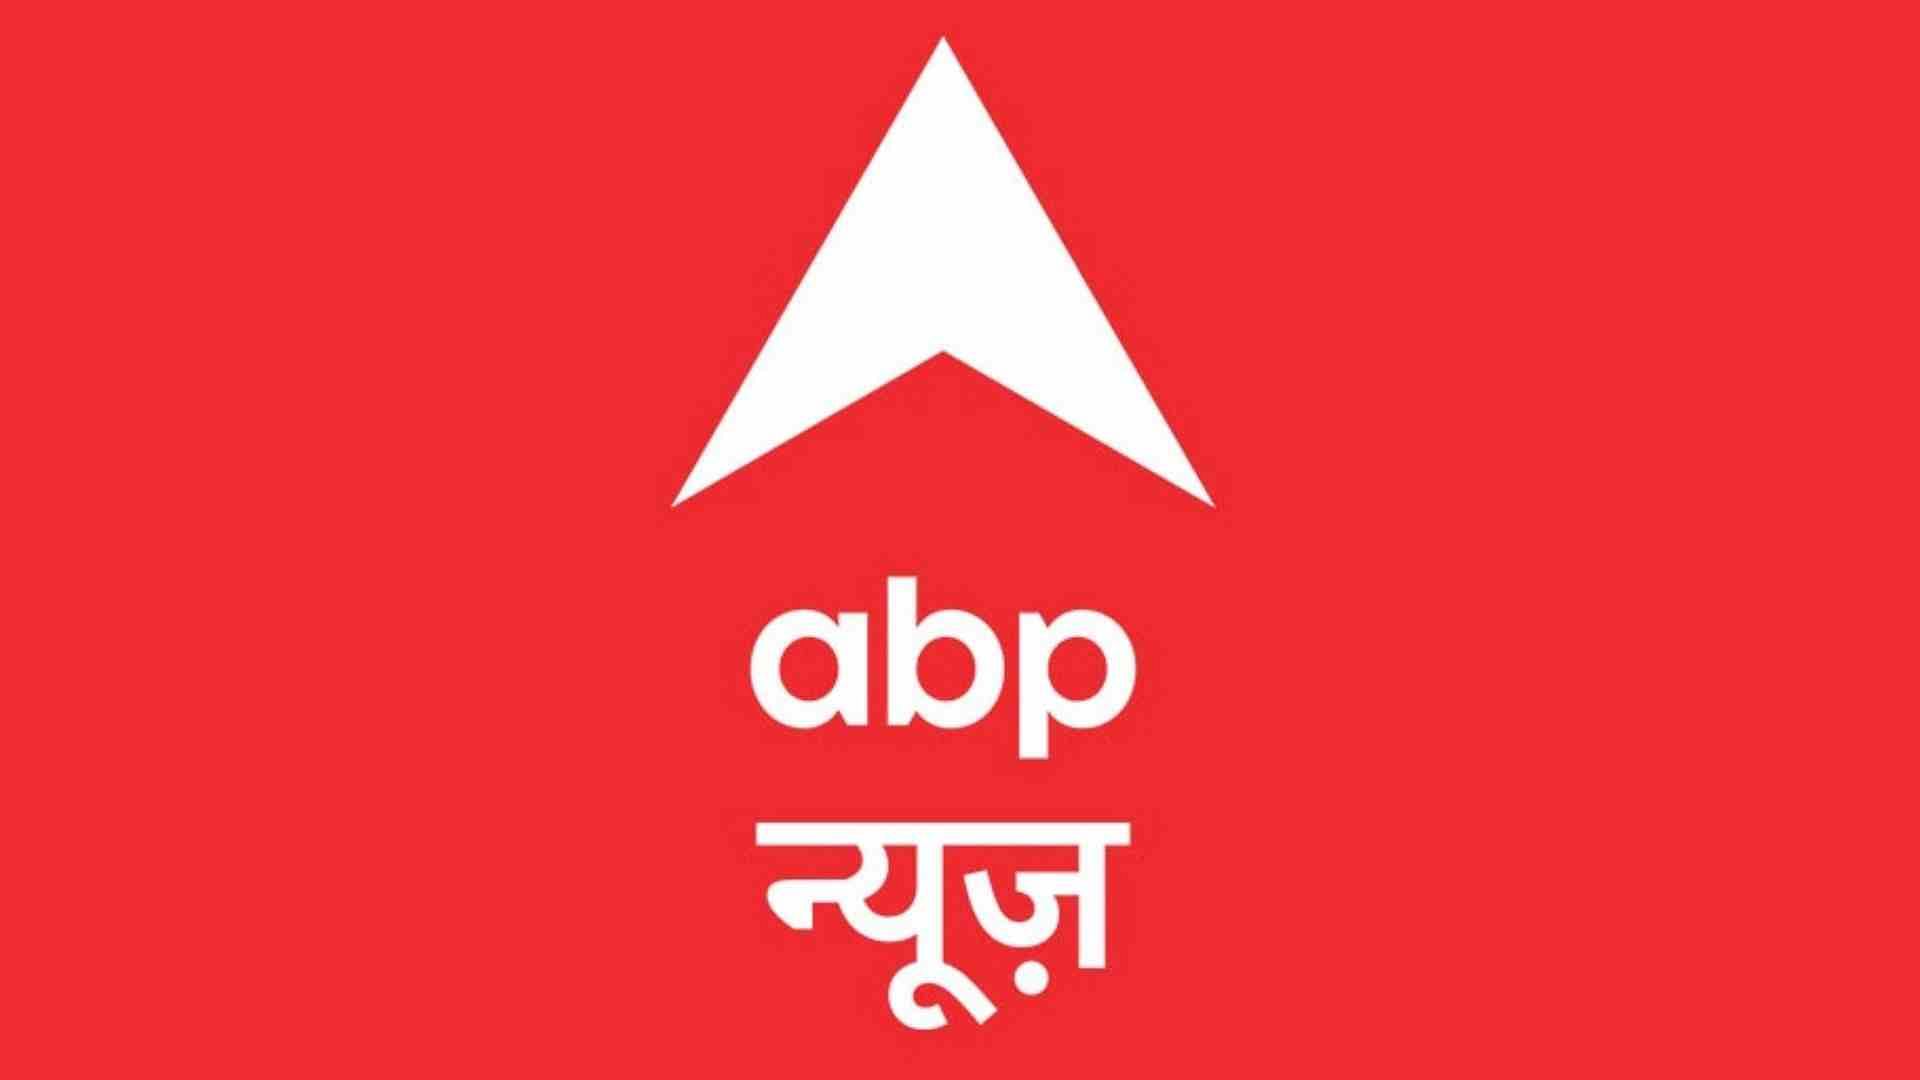 abp logo?blur=25